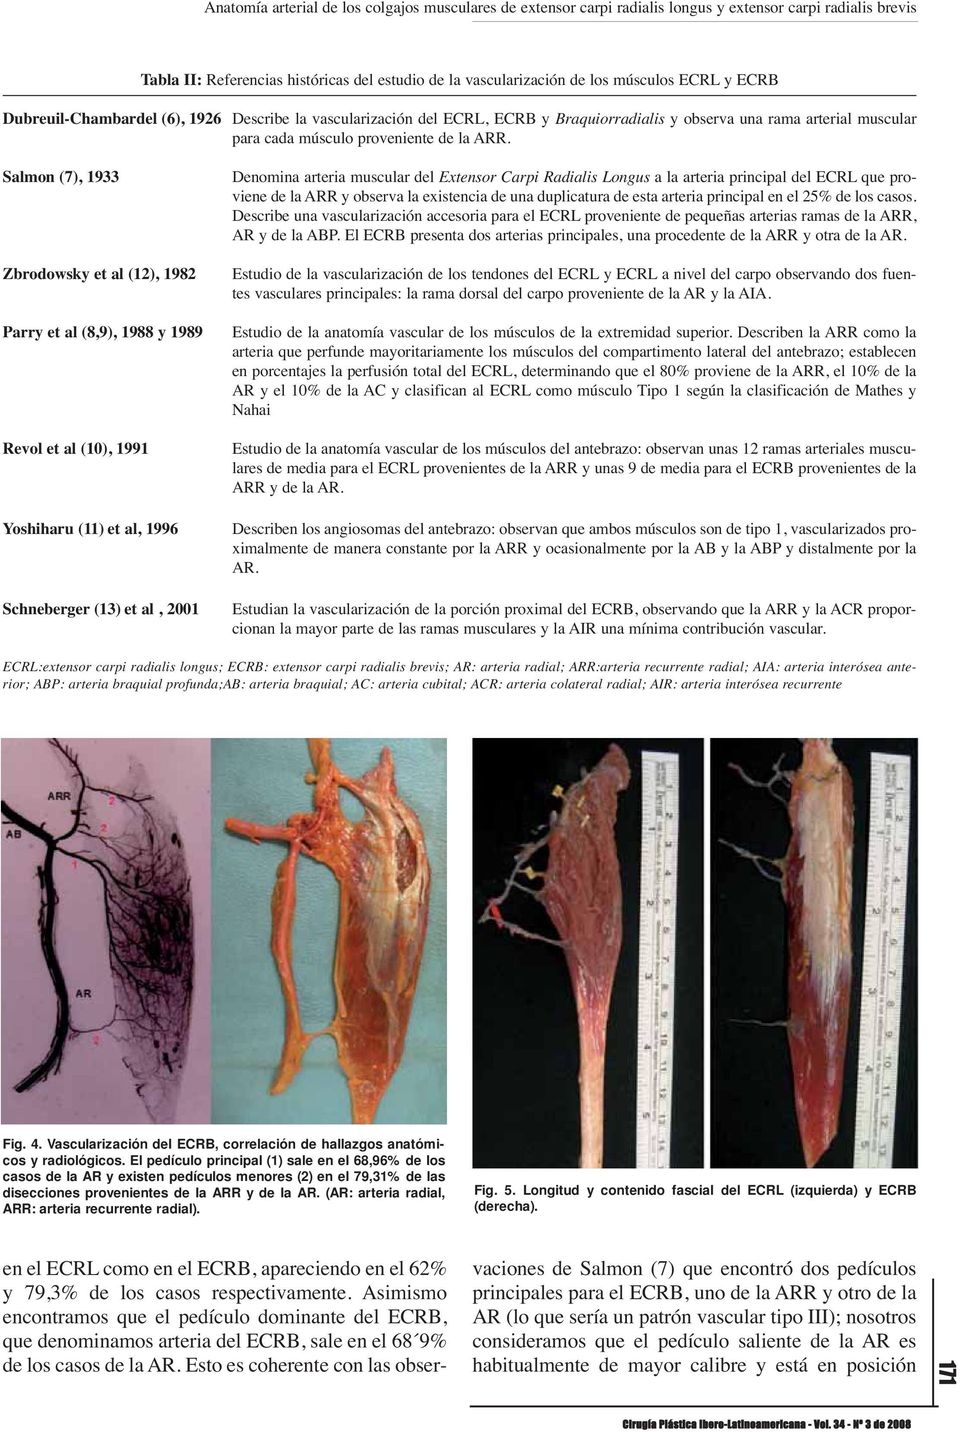 Salmon (7), 1933 Zbrodowsky et al (12), 1982 Parry et al (8,9), 1988 y 1989 Revol et al (10), 1991 Yoshiharu (11) et al, 1996 Schneberger (13) et al, 2001 Denomina arteria muscular del Extensor Carpi